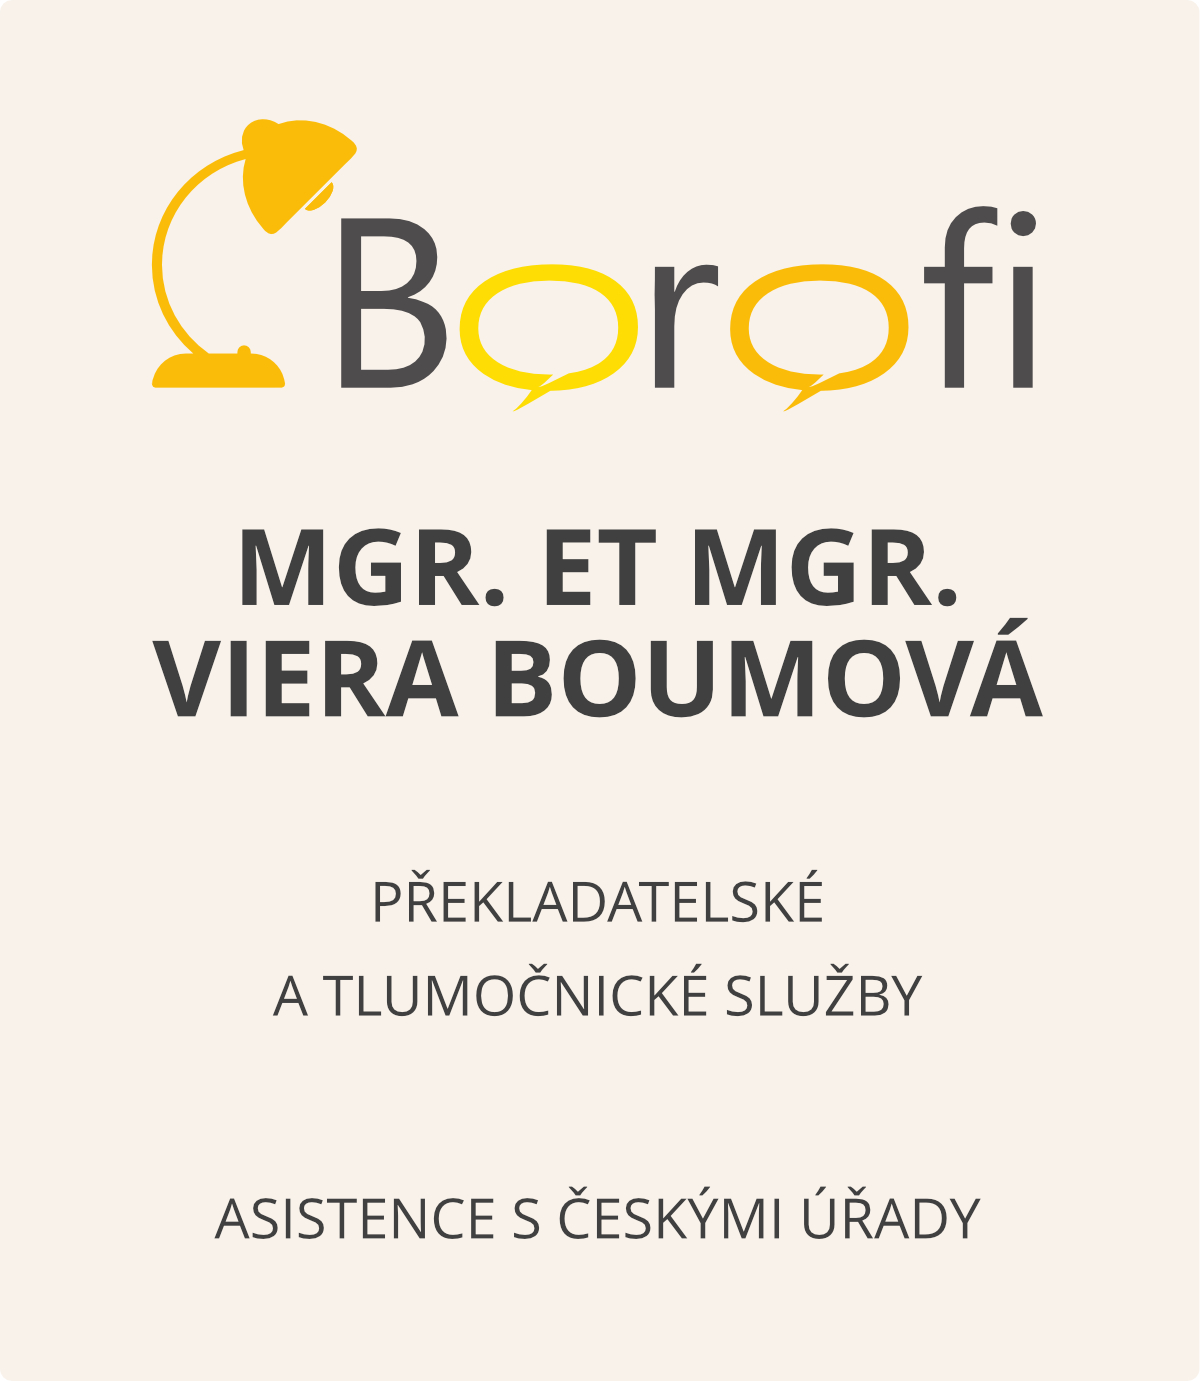 Borofi